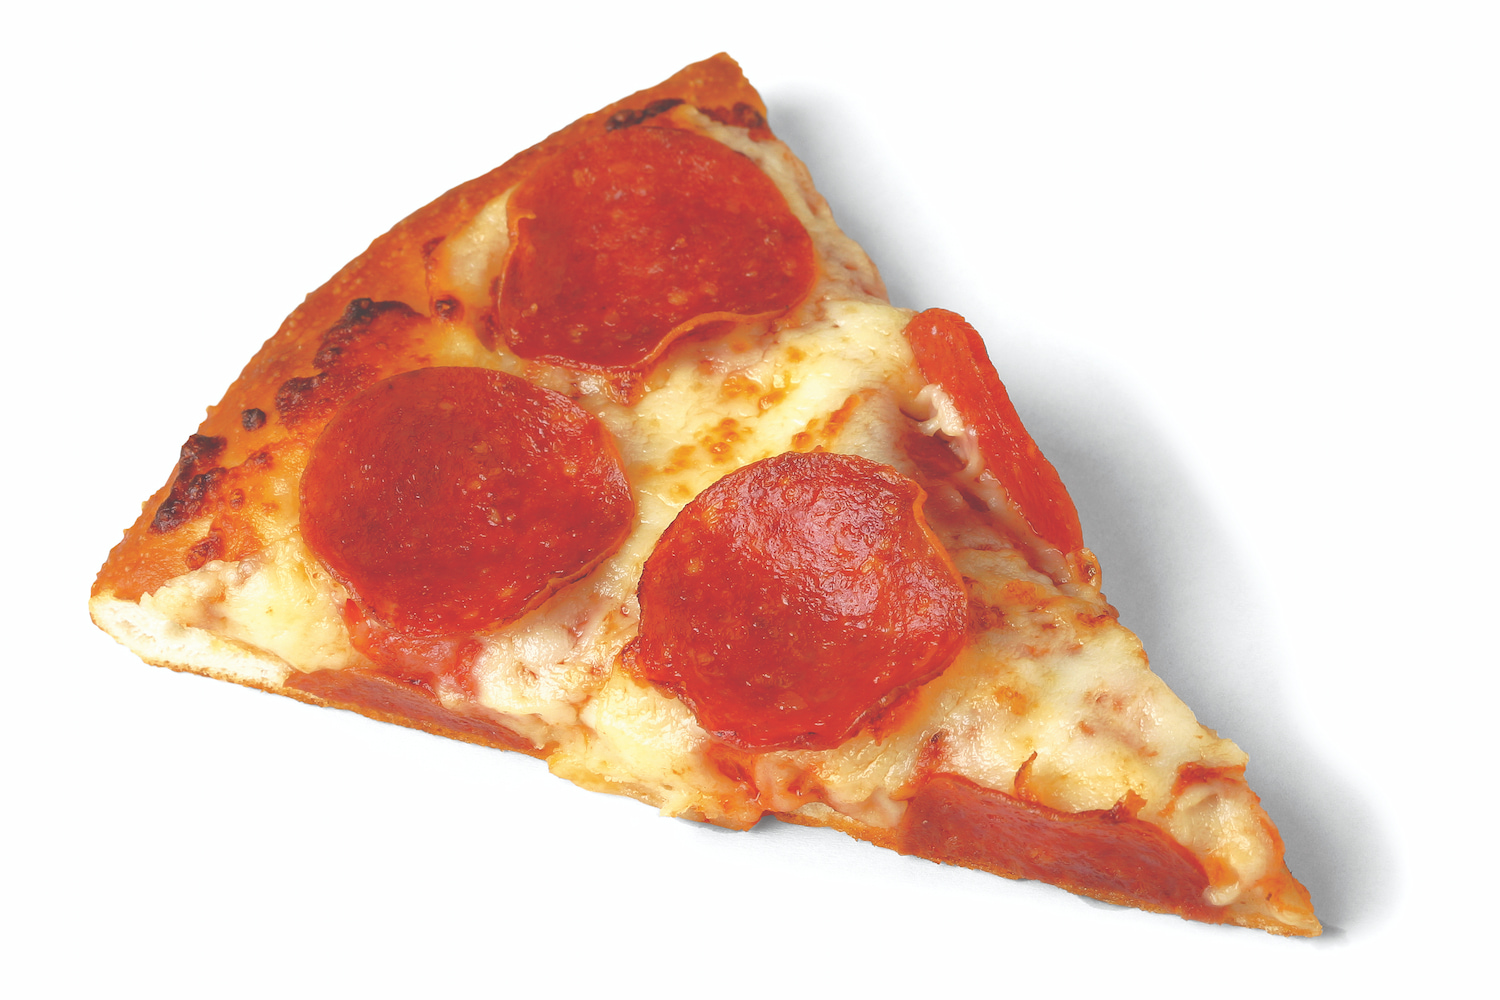 A pepperoni pizza slice